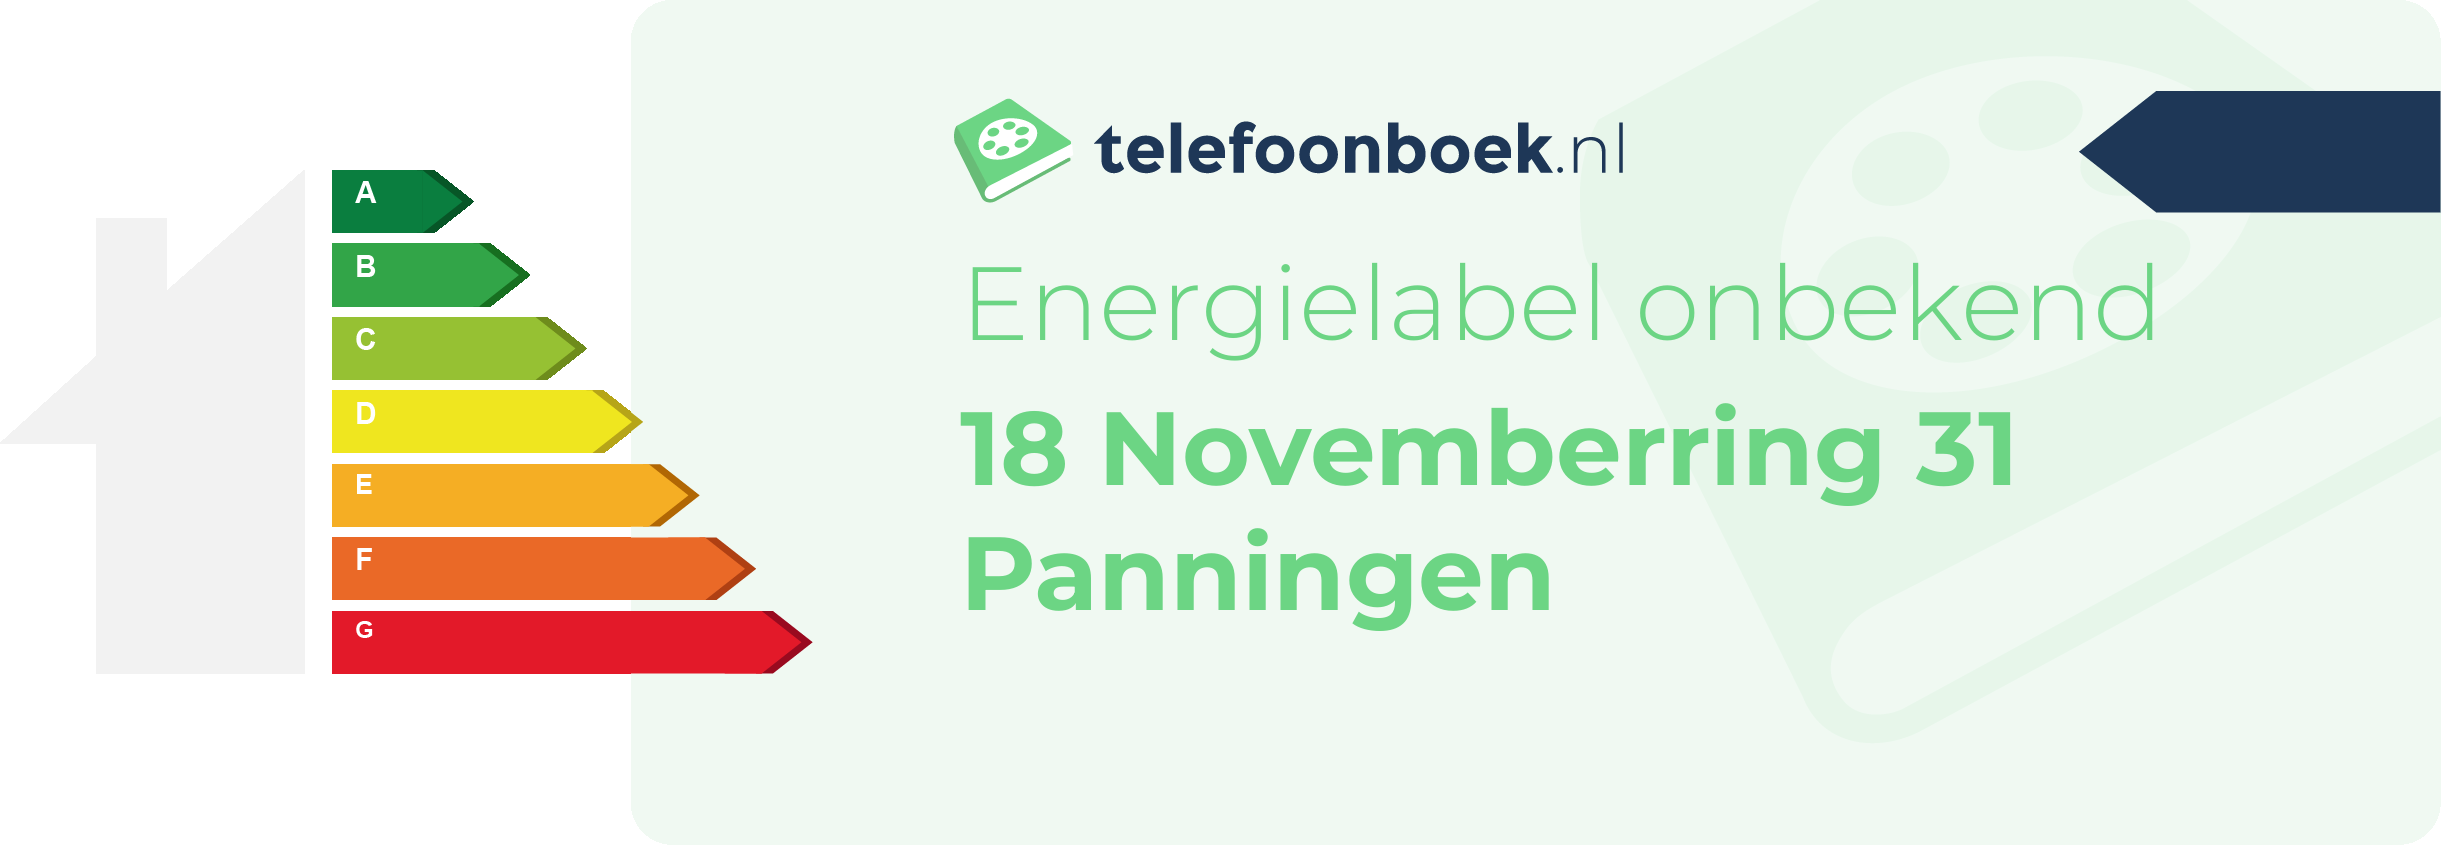 Energielabel 18 Novemberring 31 Panningen